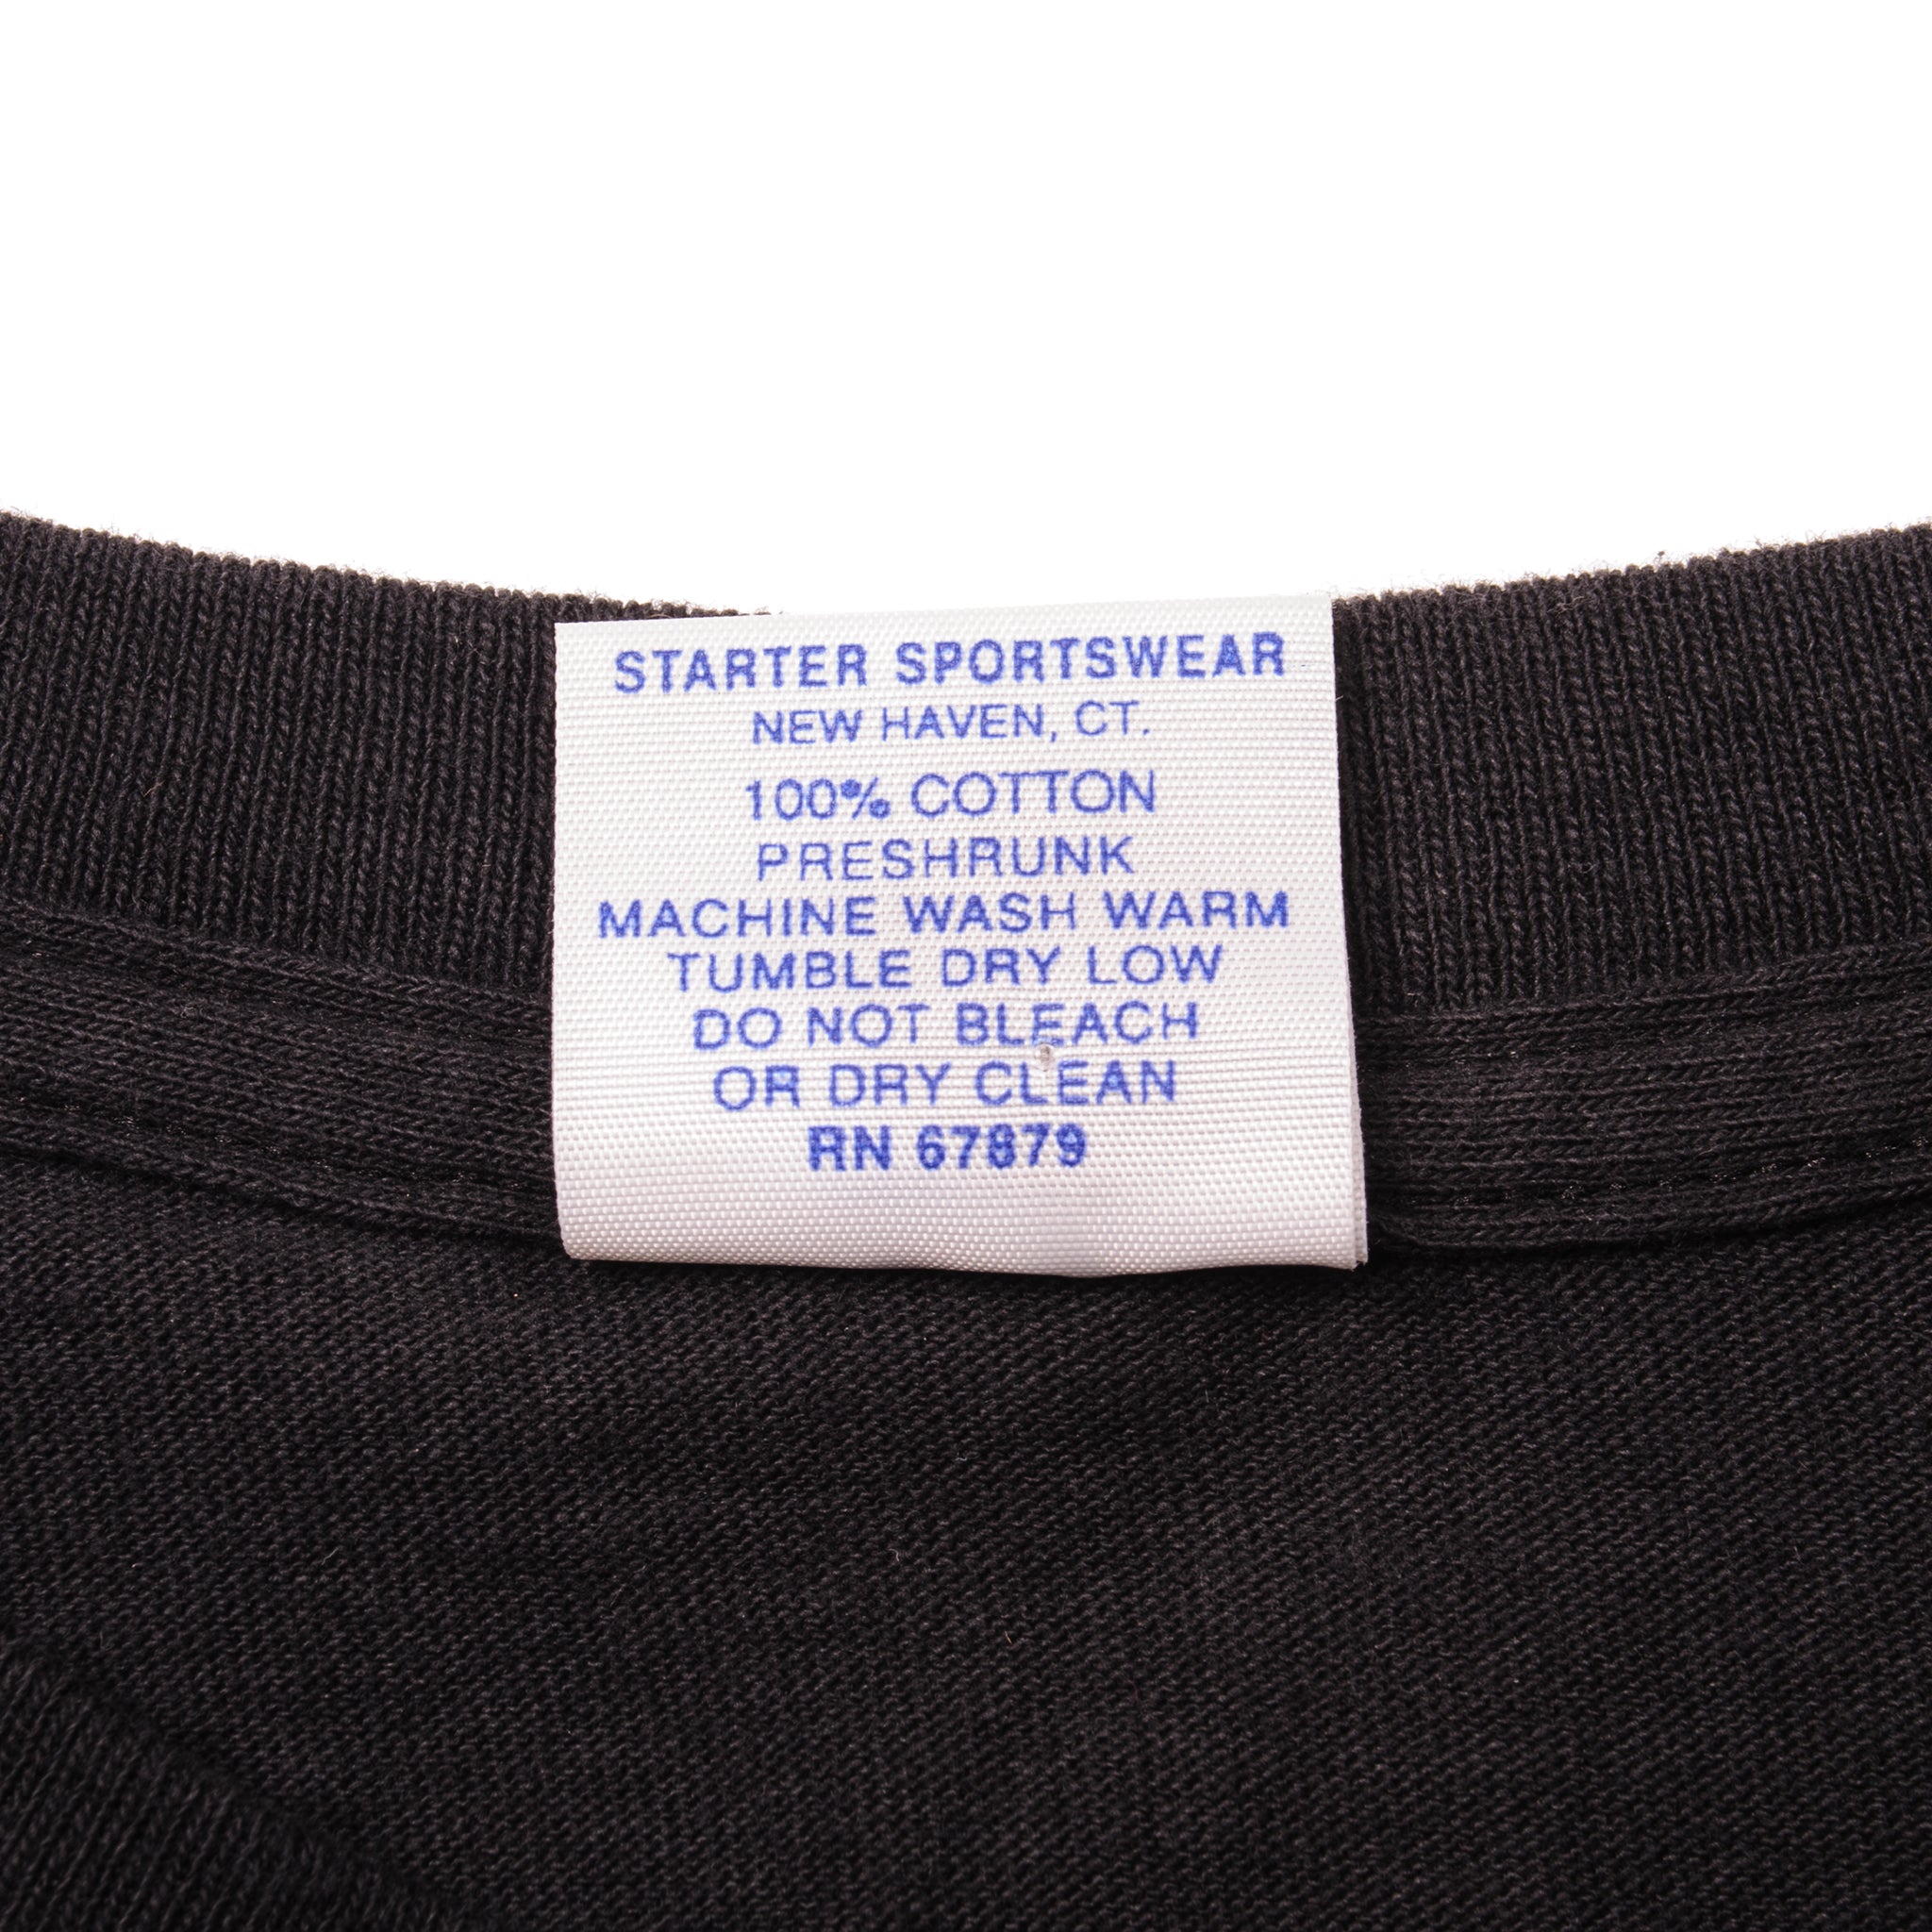 Vintage 1993 Mighty Ducks of Anaheim Color Block Tshirt - Size XL